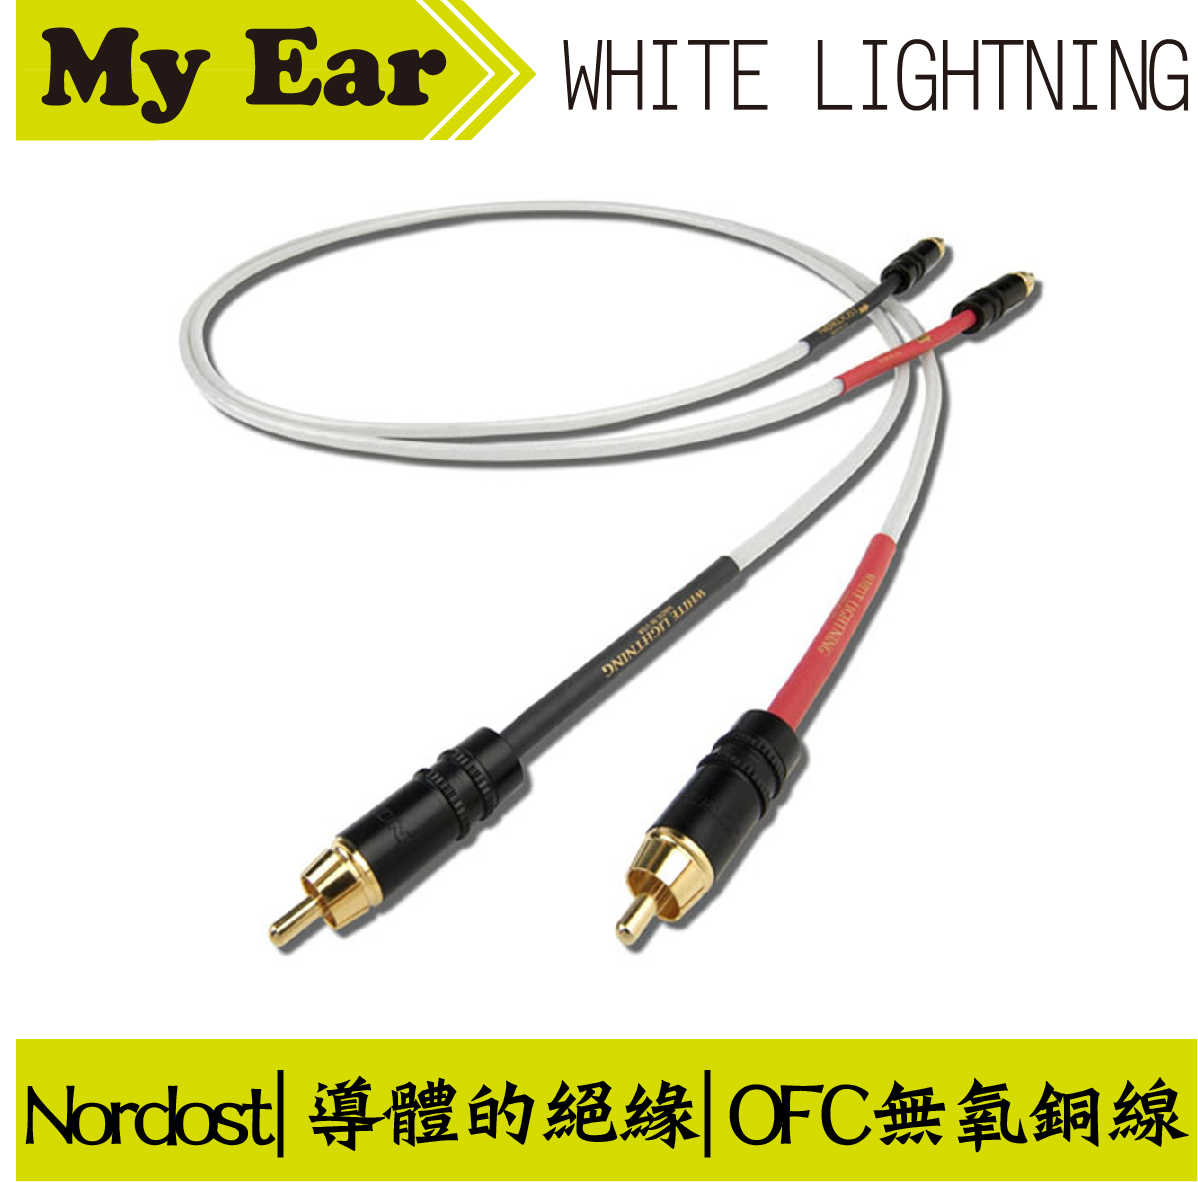 NORDOST WHITE LIGHTNING 白光1M /對 | My Ear 耳機專門店